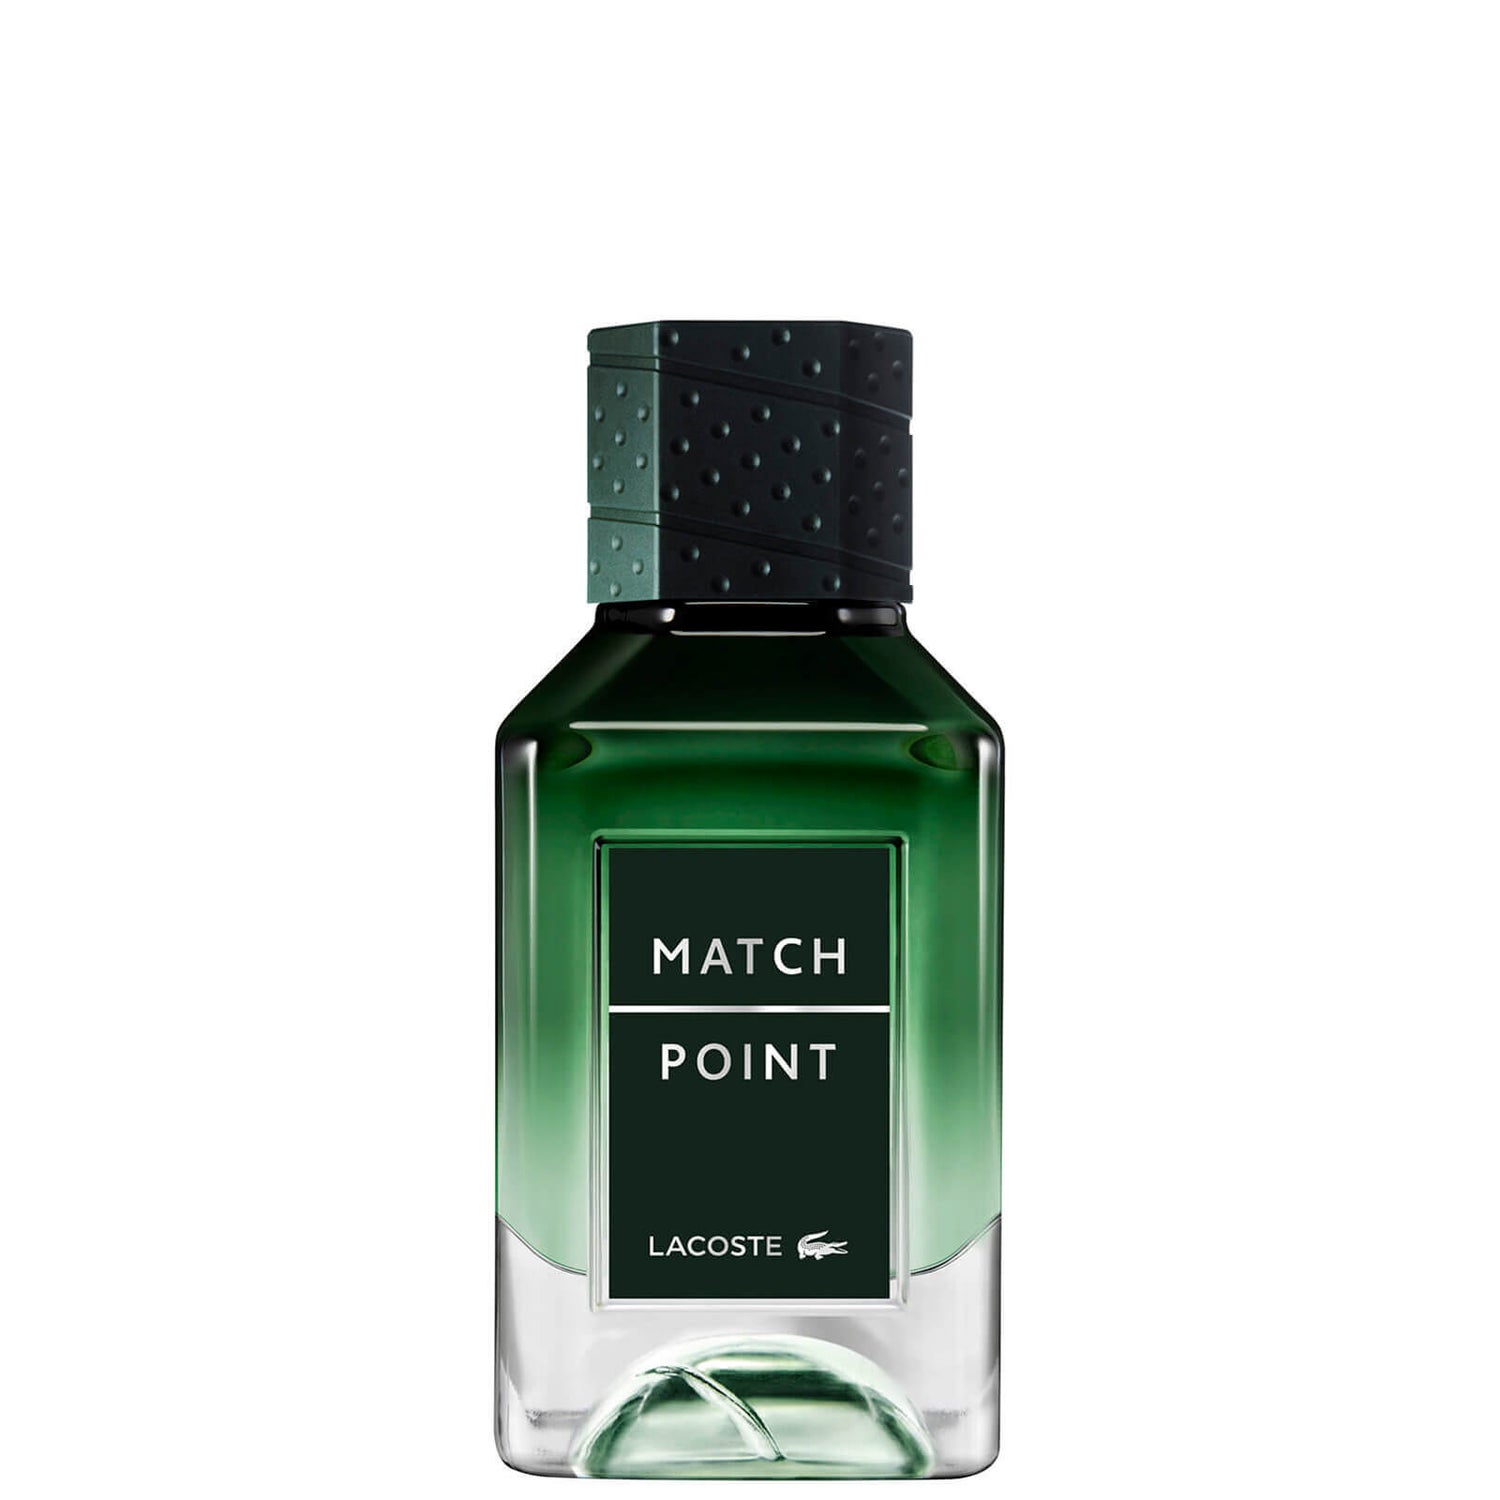 Lacoste Match Point Eau de Parfum för män 50ml